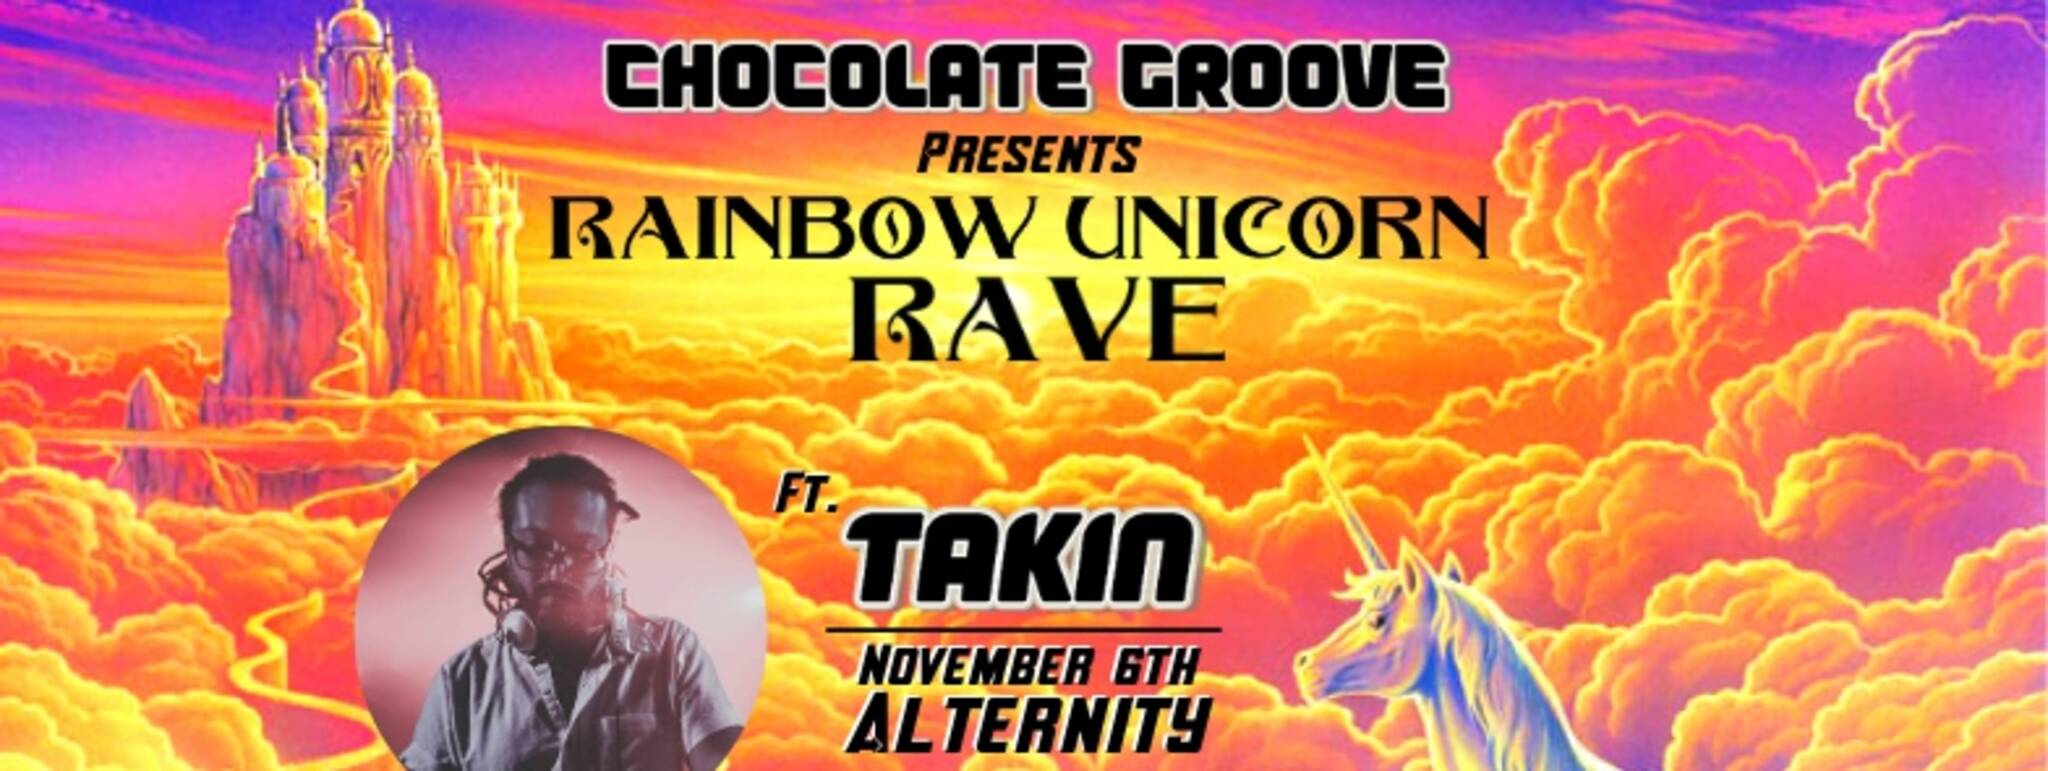 Chocolate Groove Rainbow Unicorn Rave 8829